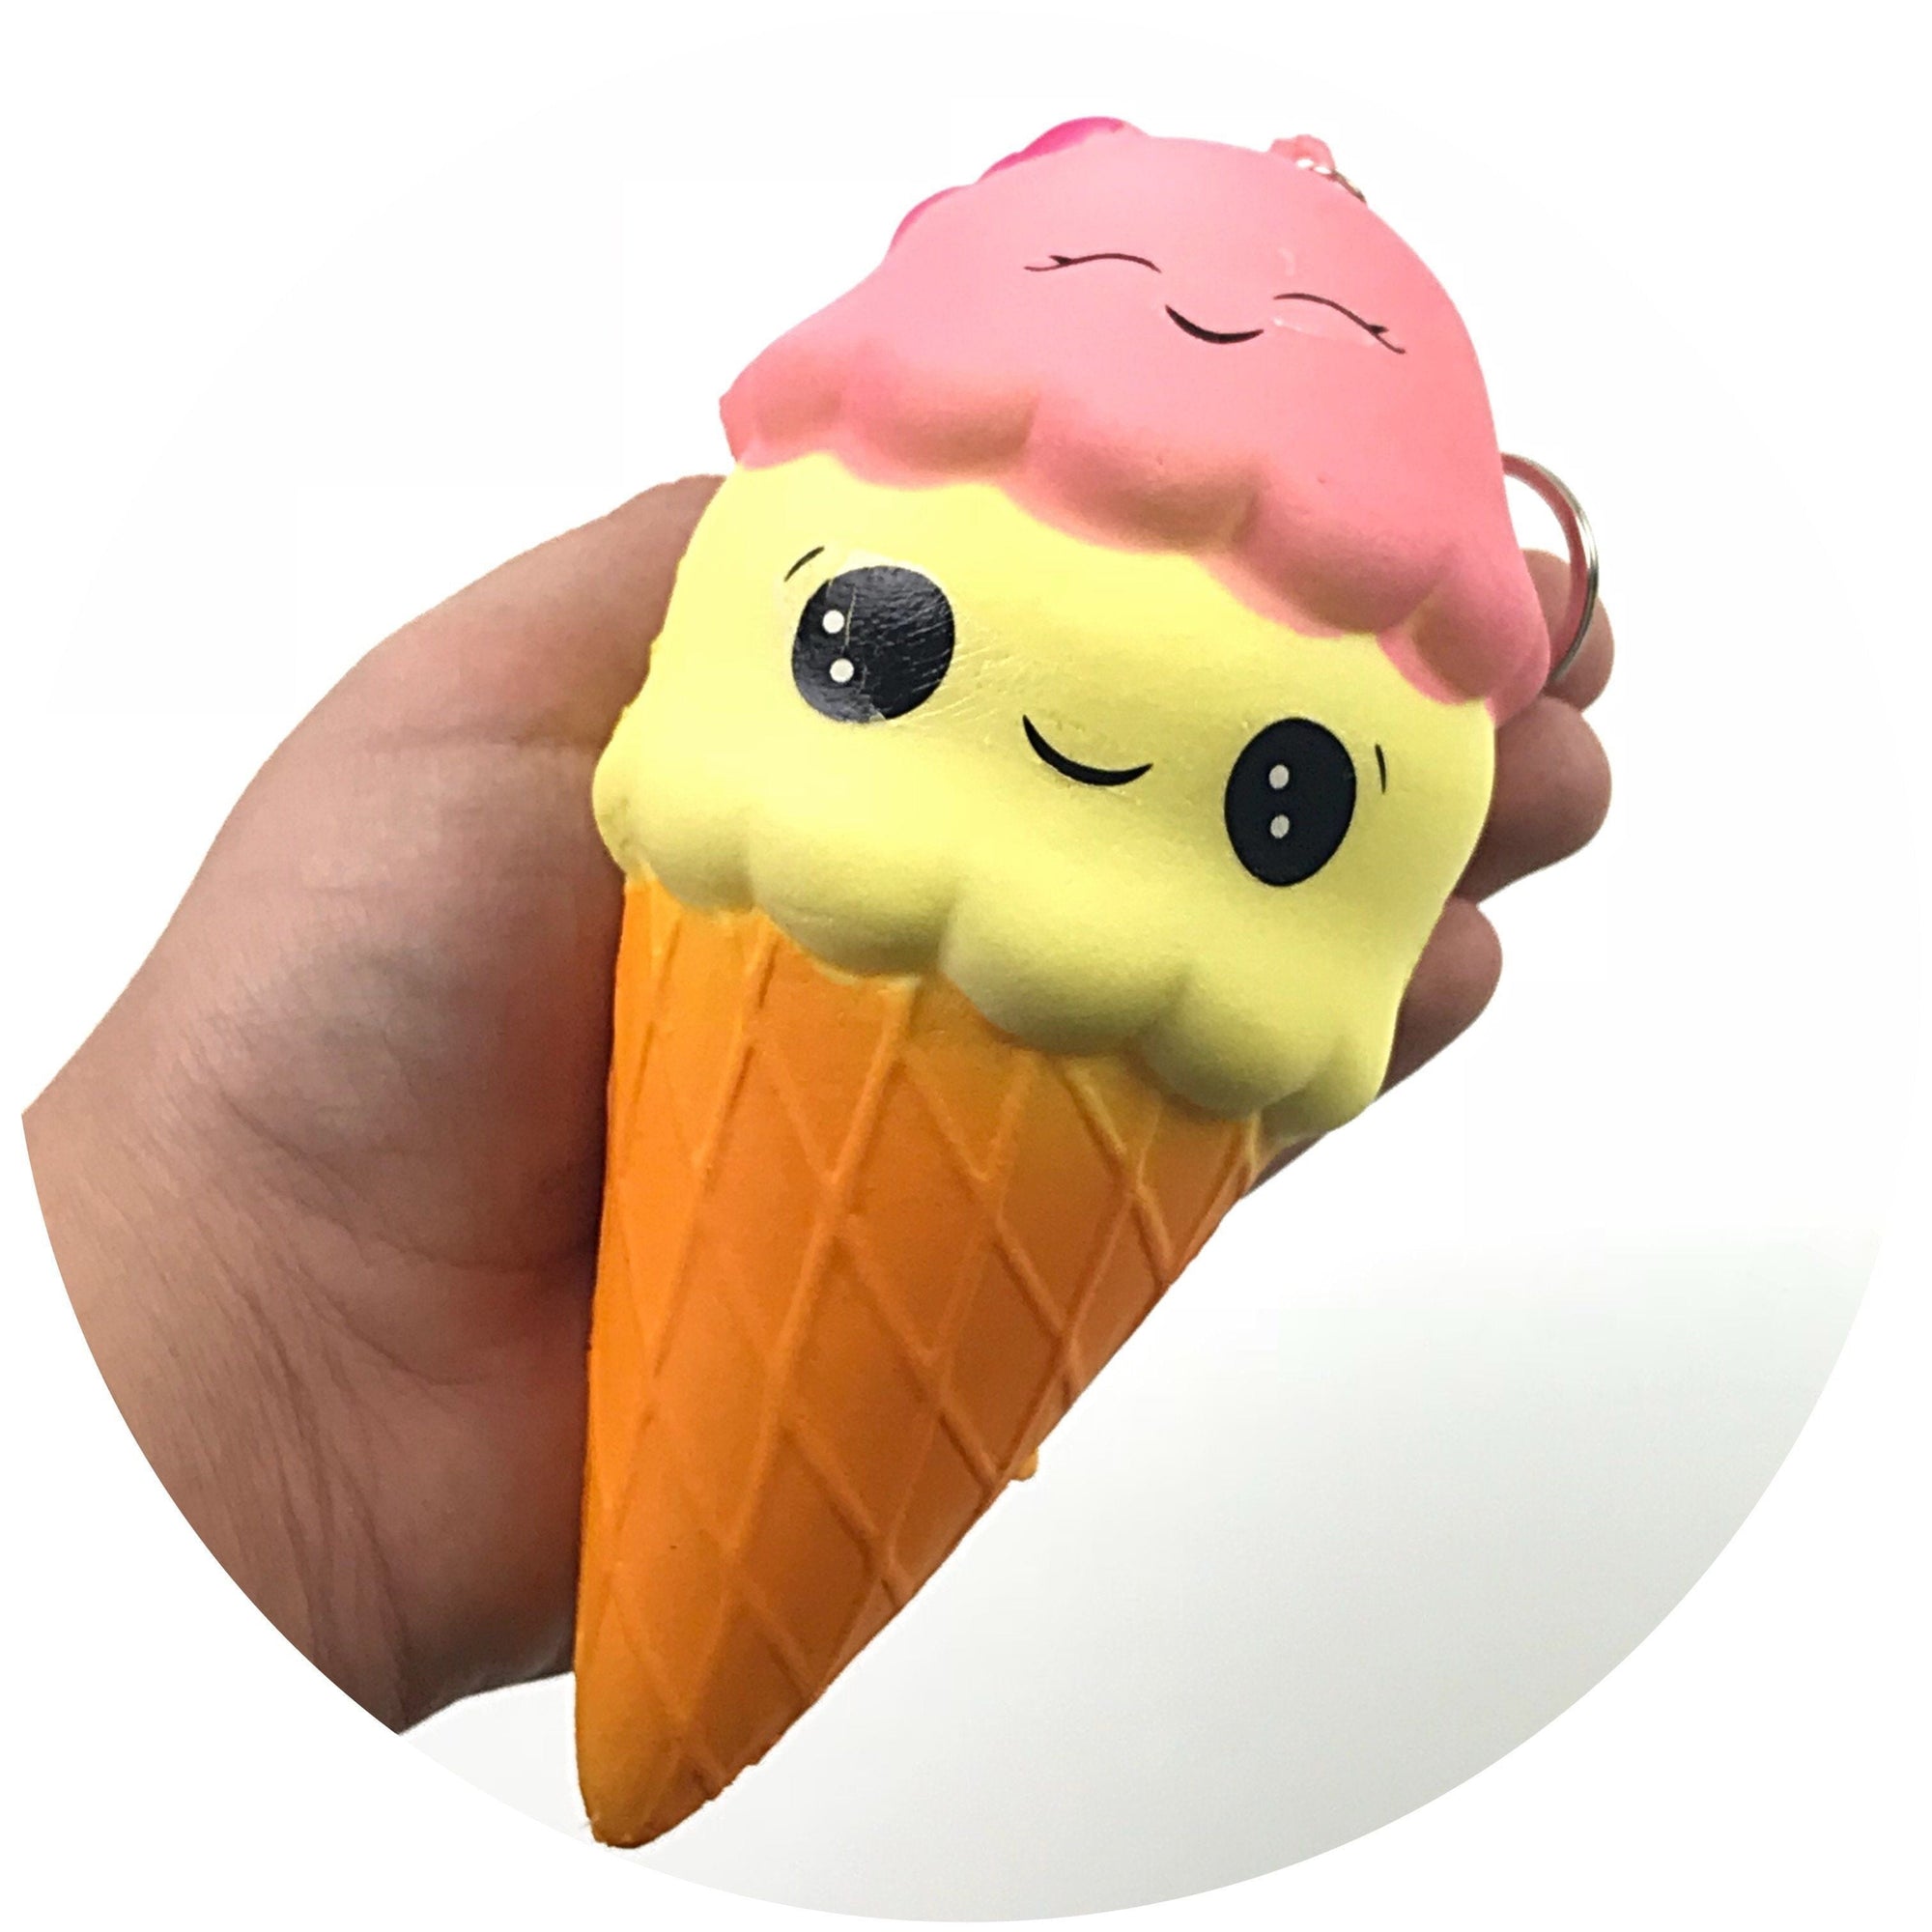 Double Scoop Ice Cream Squishy Jumbo - Buy Squishys Here